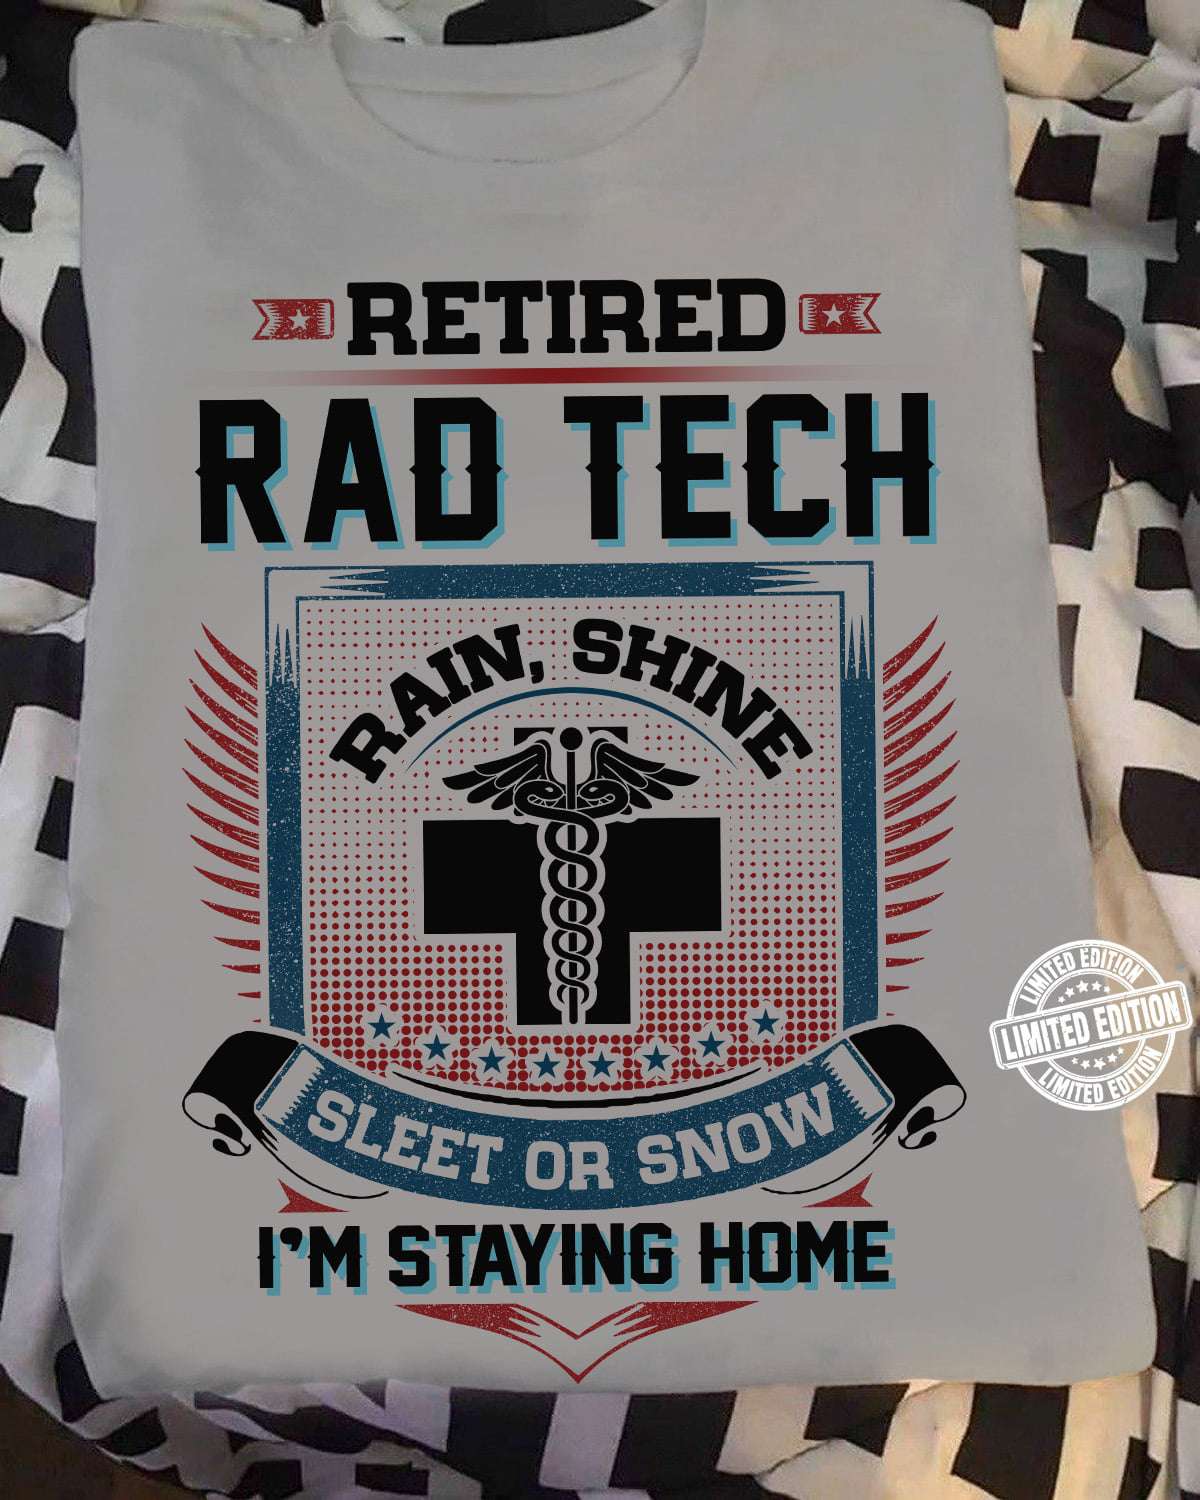 Retired rad tech - Rain, shine, sleet or snow, I'm staying home